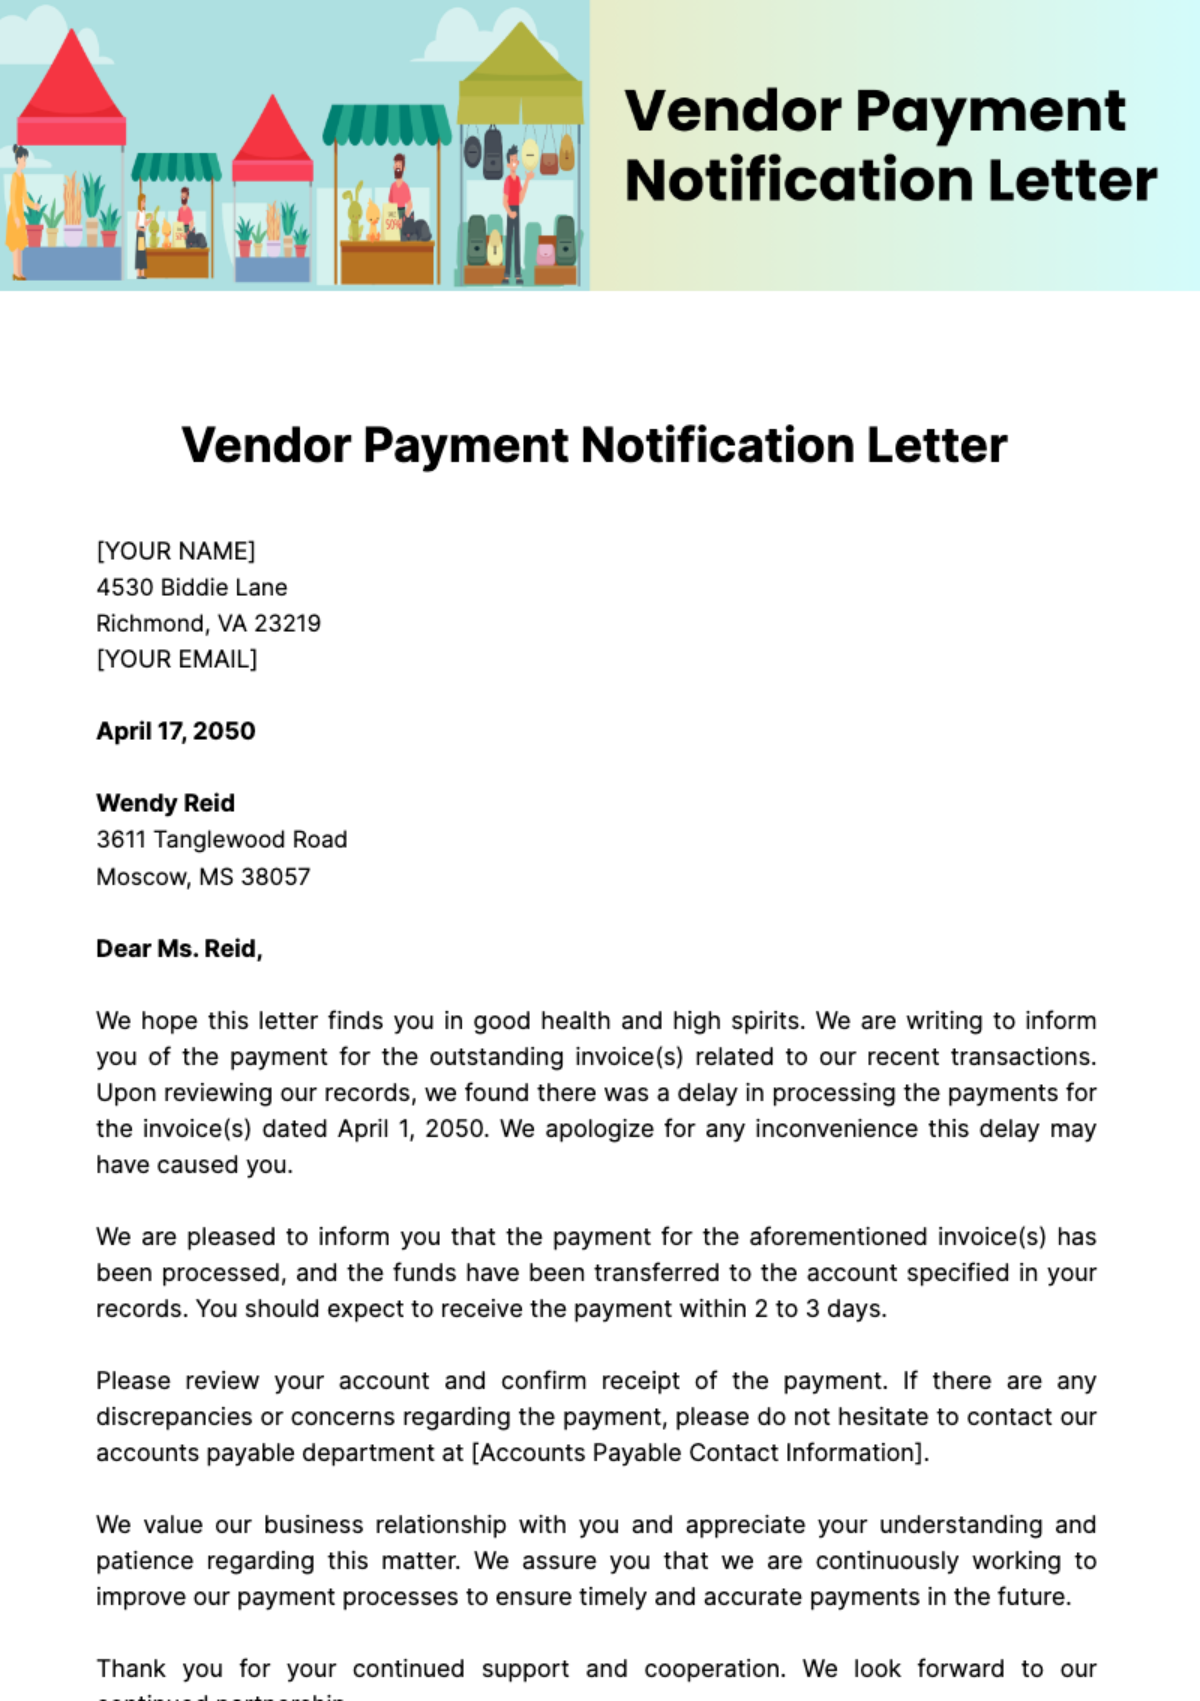 Vendor Payment Notification Letter Template